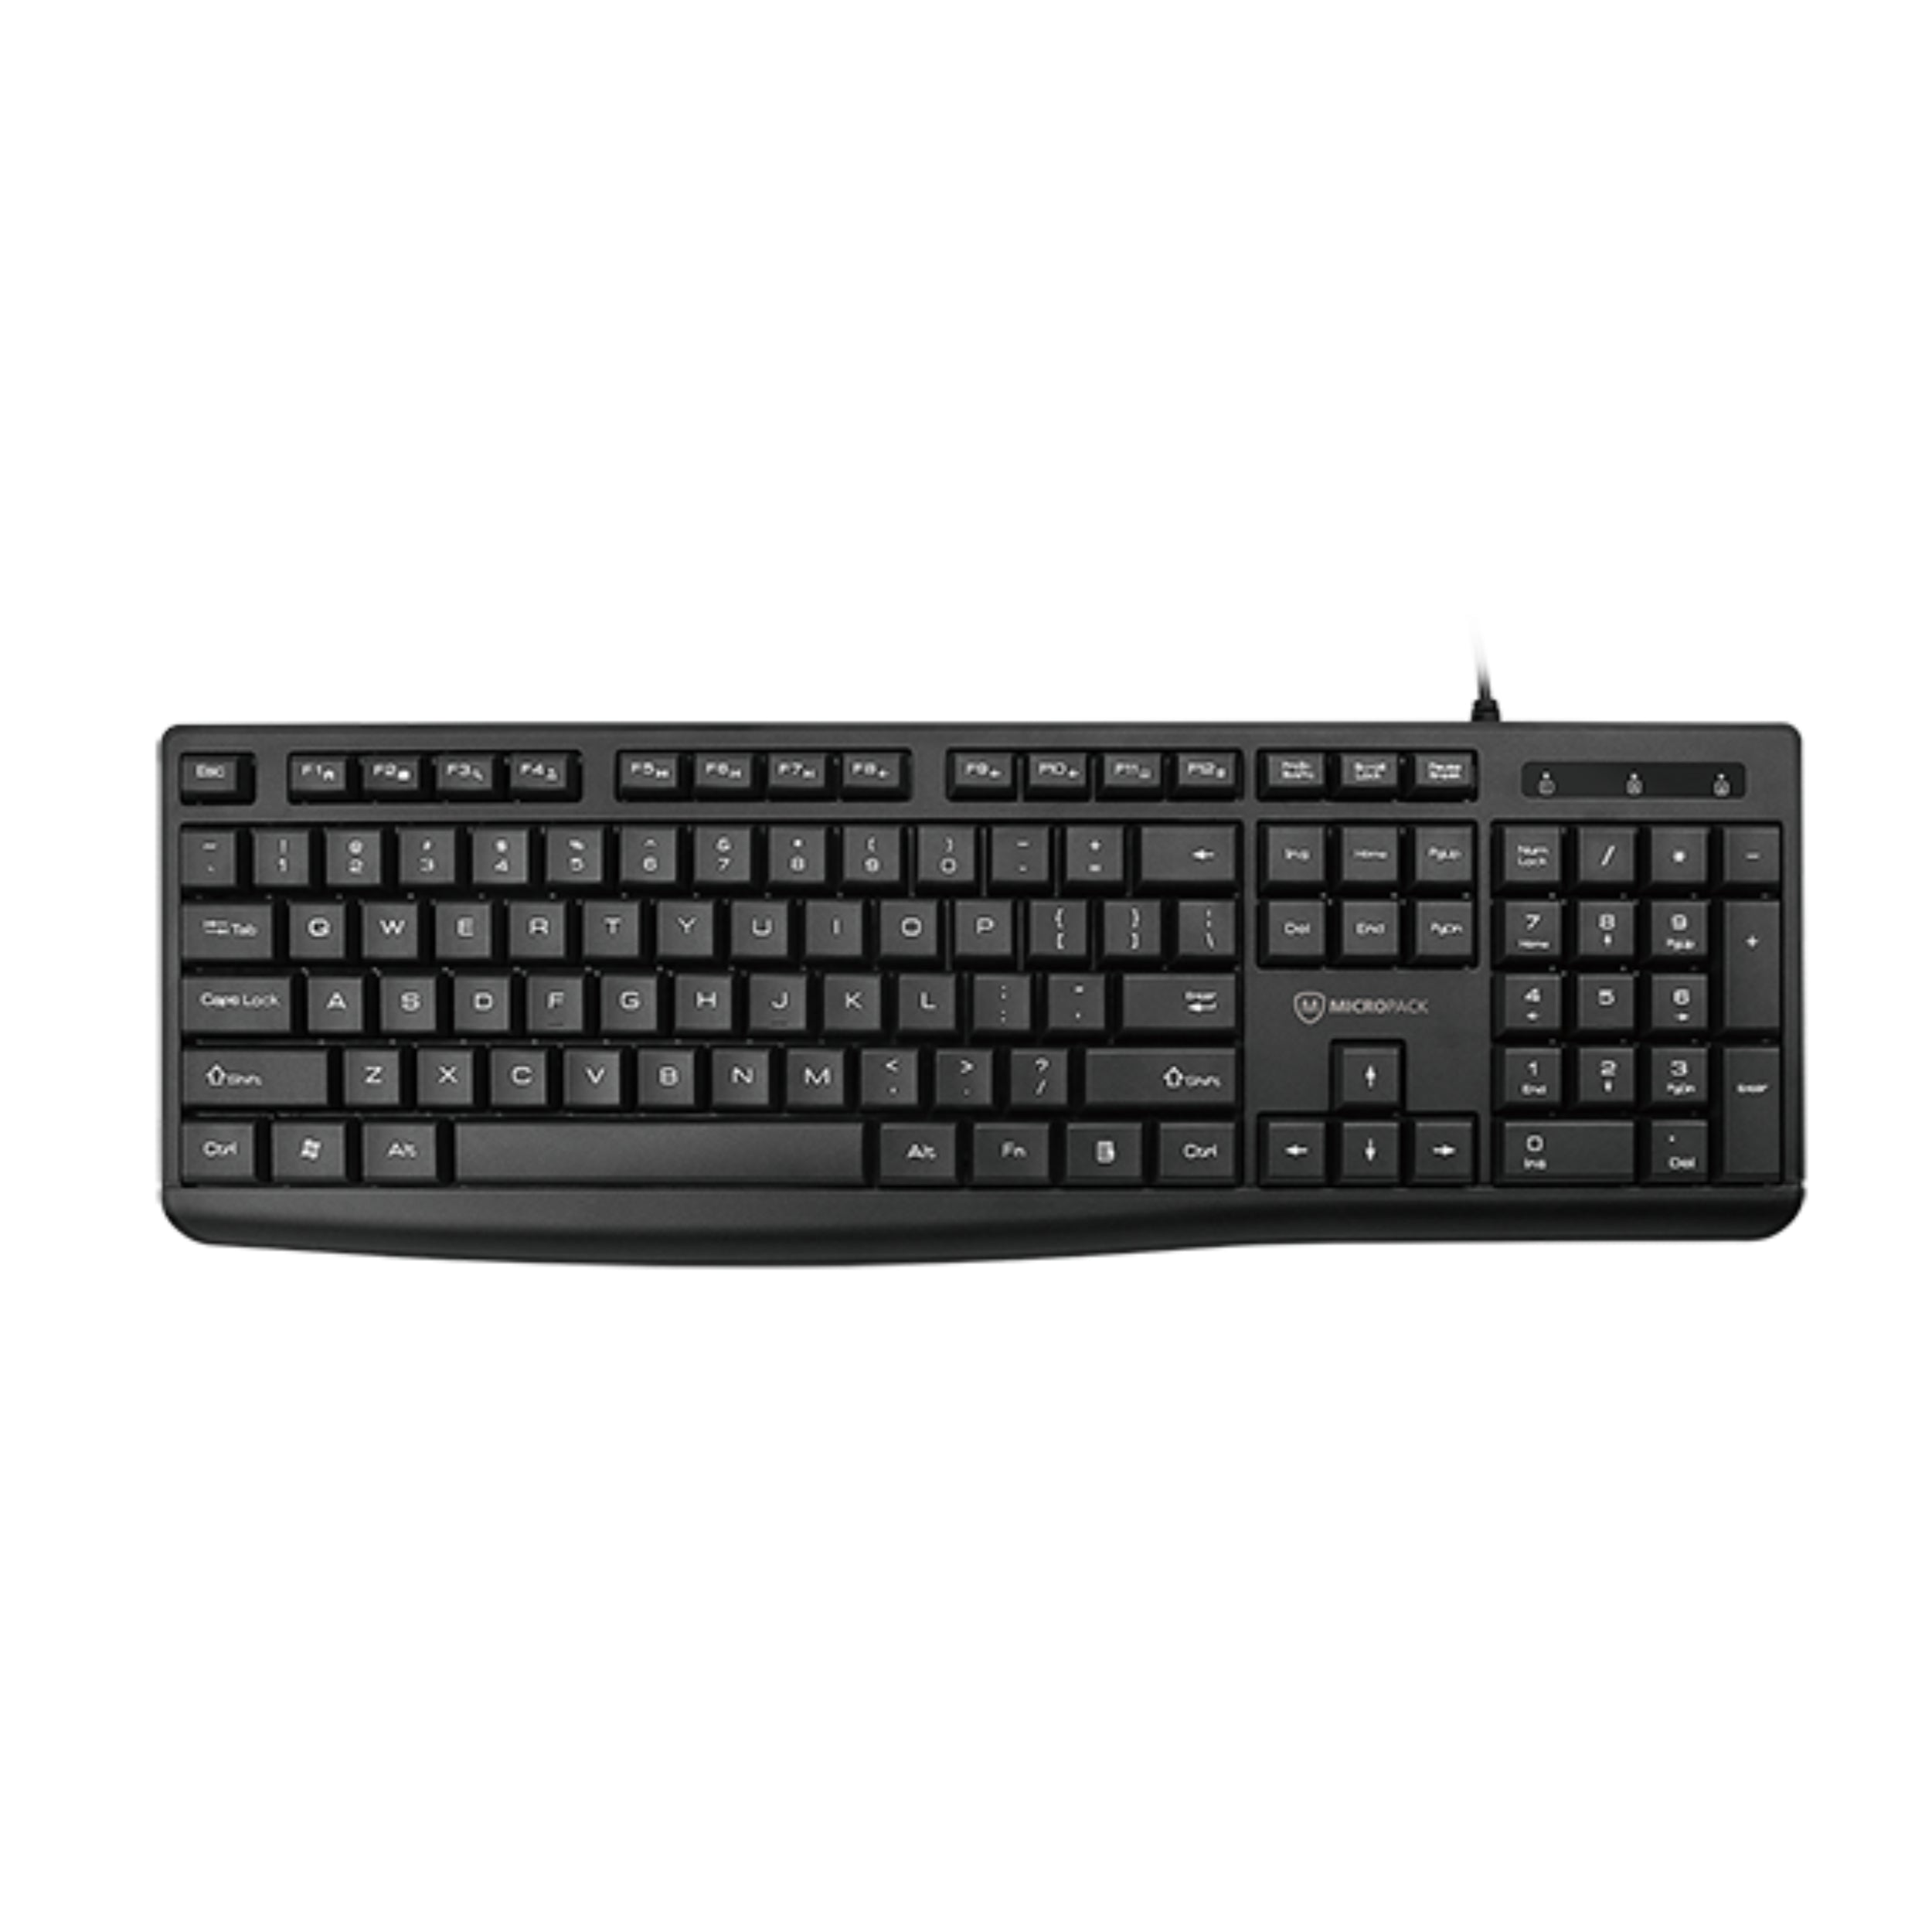 Supply Wired Keyboard Wholesale Computer Keyboard MICROPACK K-206